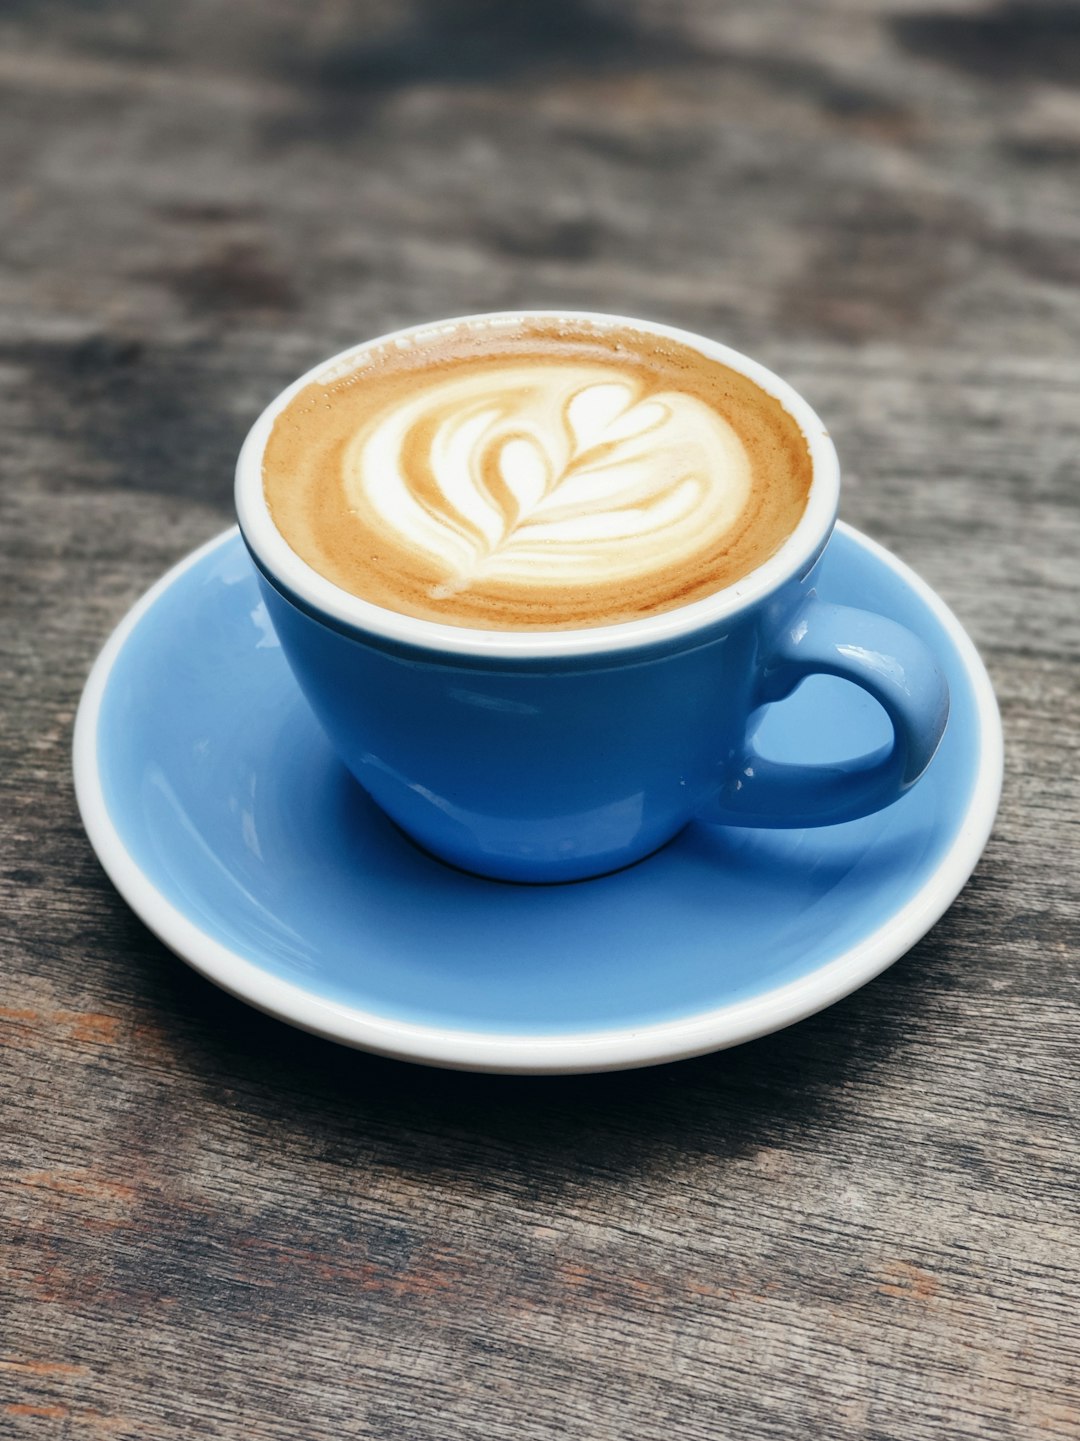  blue ceramic teacup with latte cup